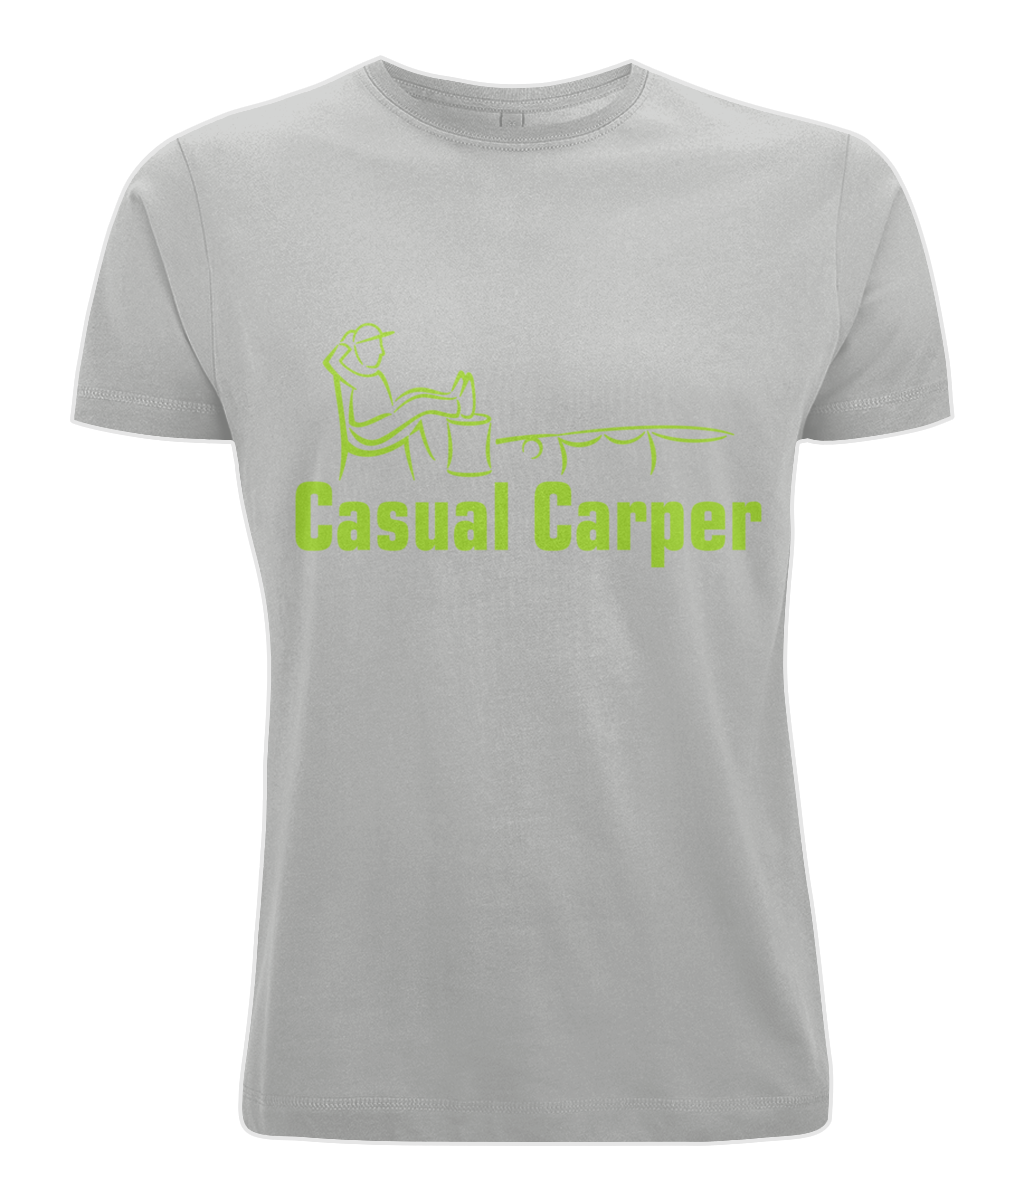 Casual Carper Logo T-Shirt